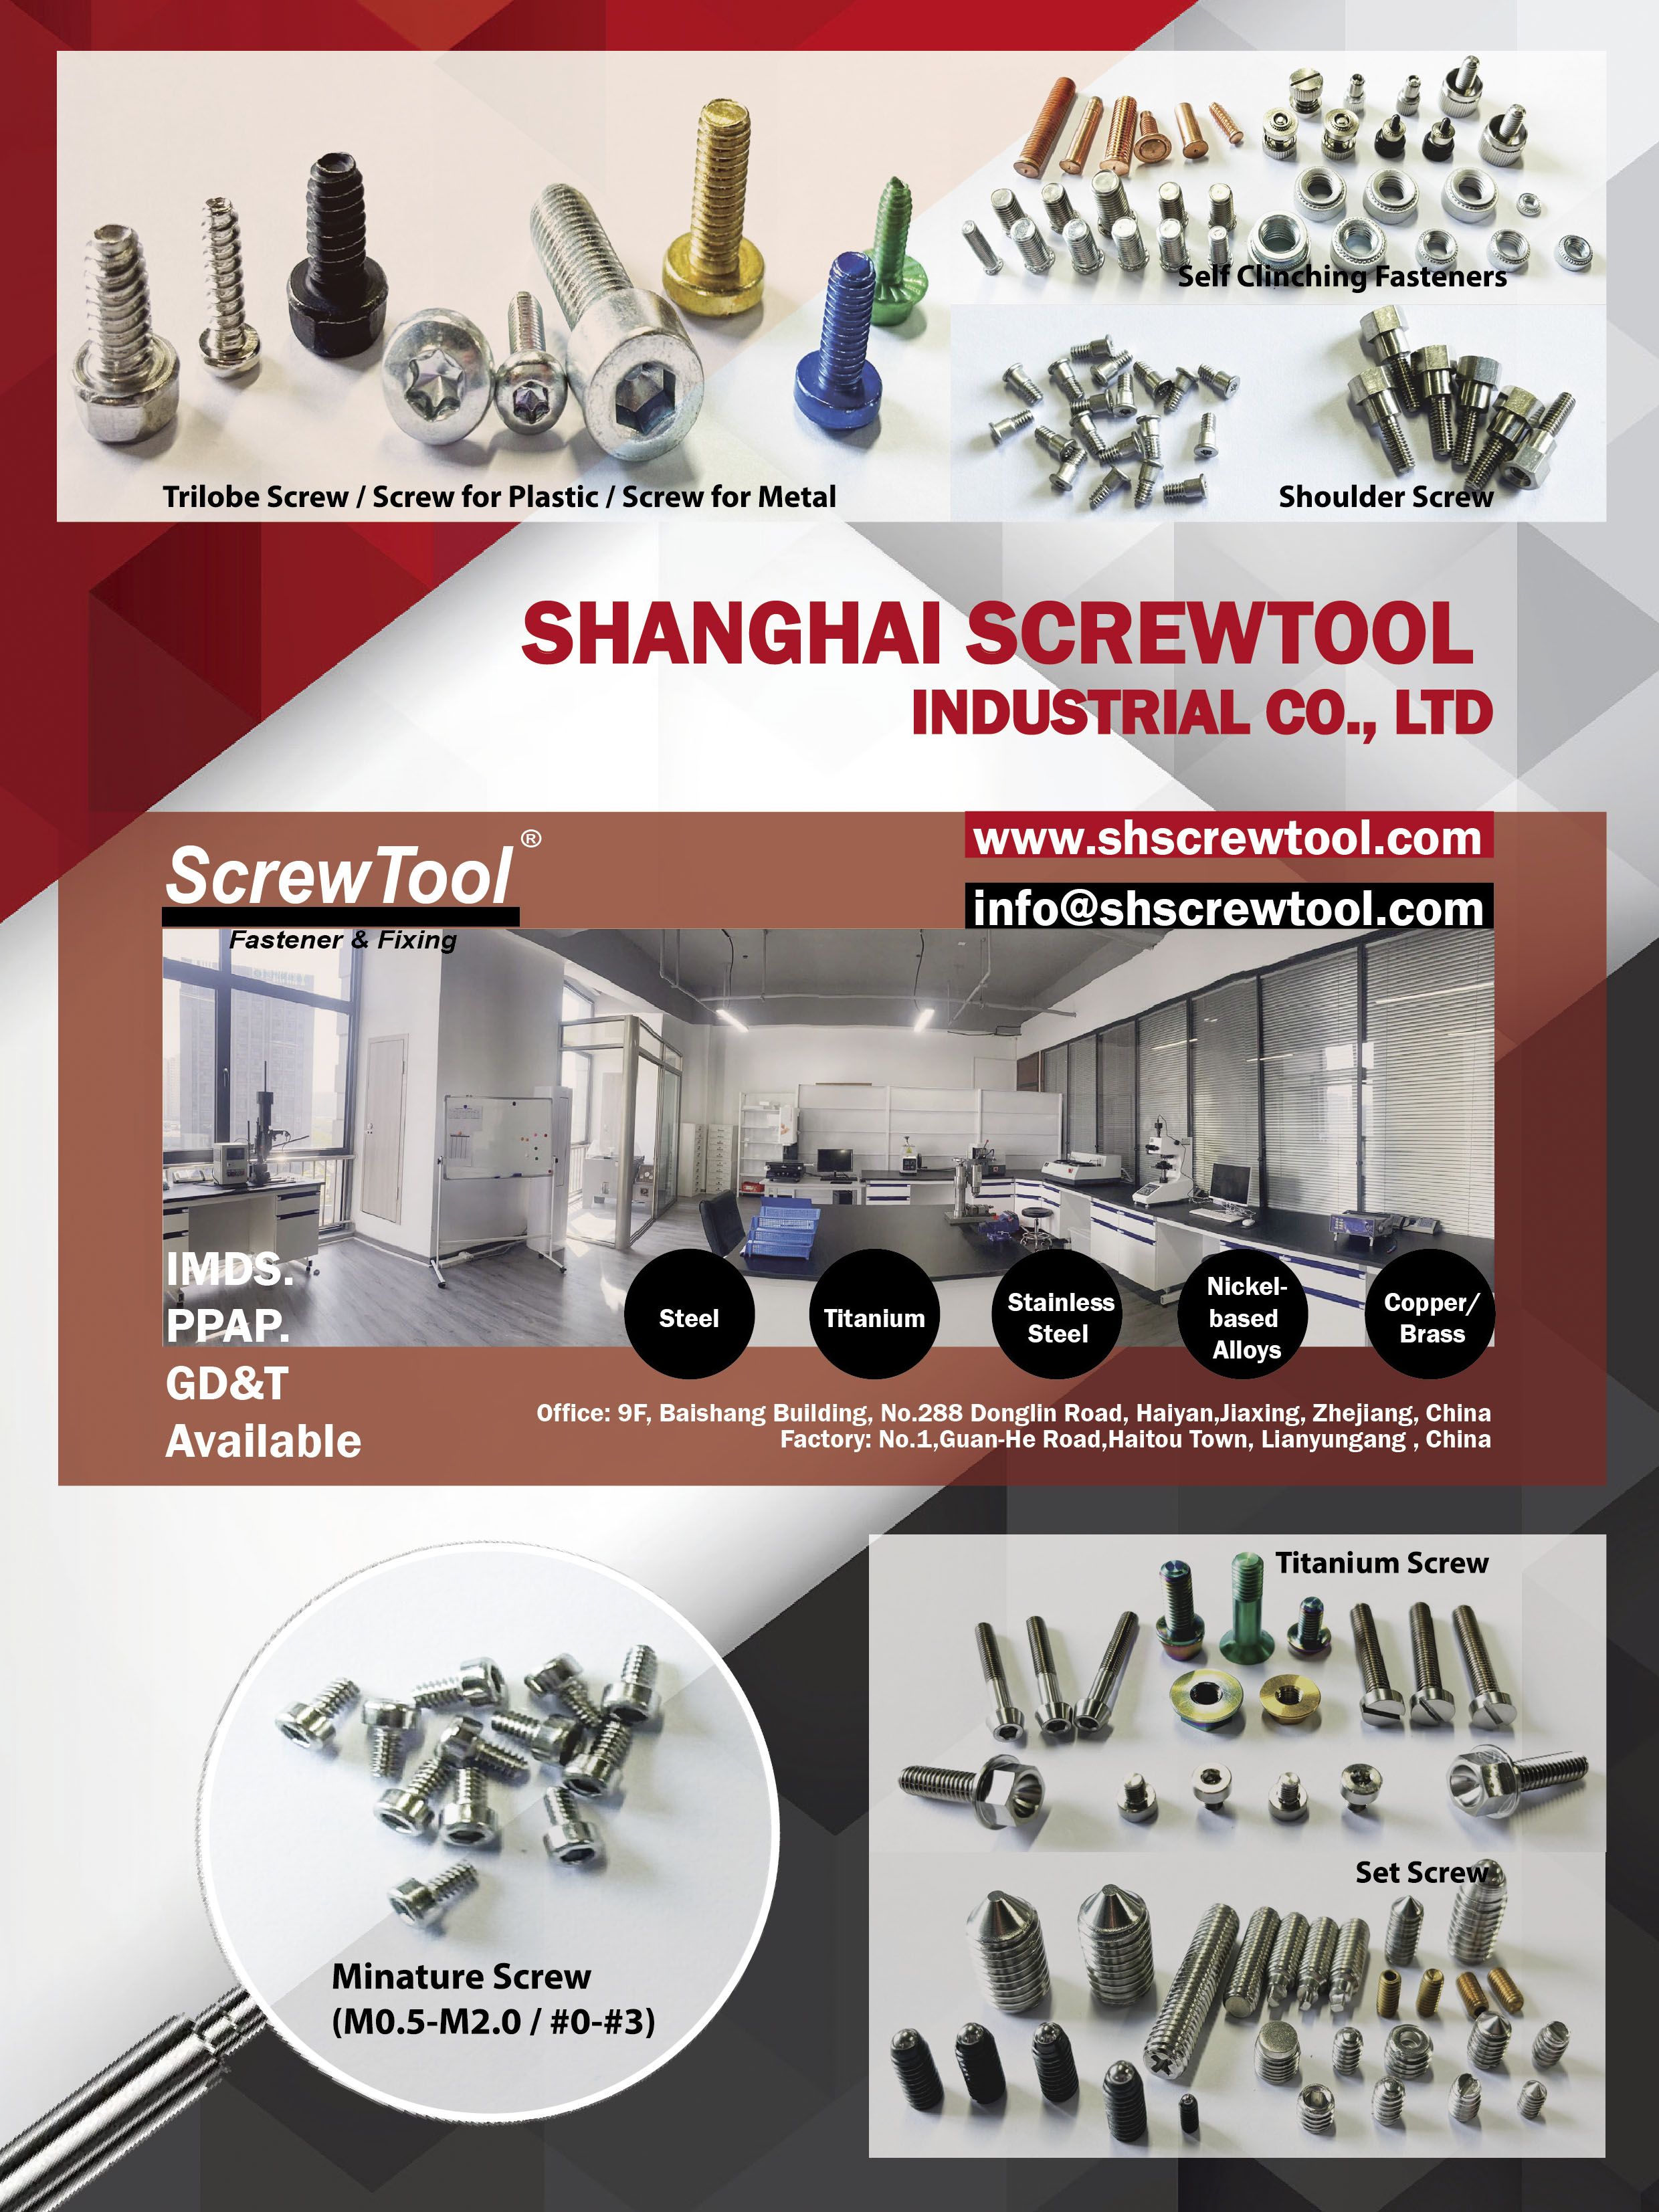 SHANGHAI SCREWTOOL INDUSTRIAL CO., LTD. , Trilobe Screw, Screw for Plastic , Screw for Metal, Self Clinching Fasteners, Shoulder Screw, Minature Screw, Titanium Screw, Set Screw